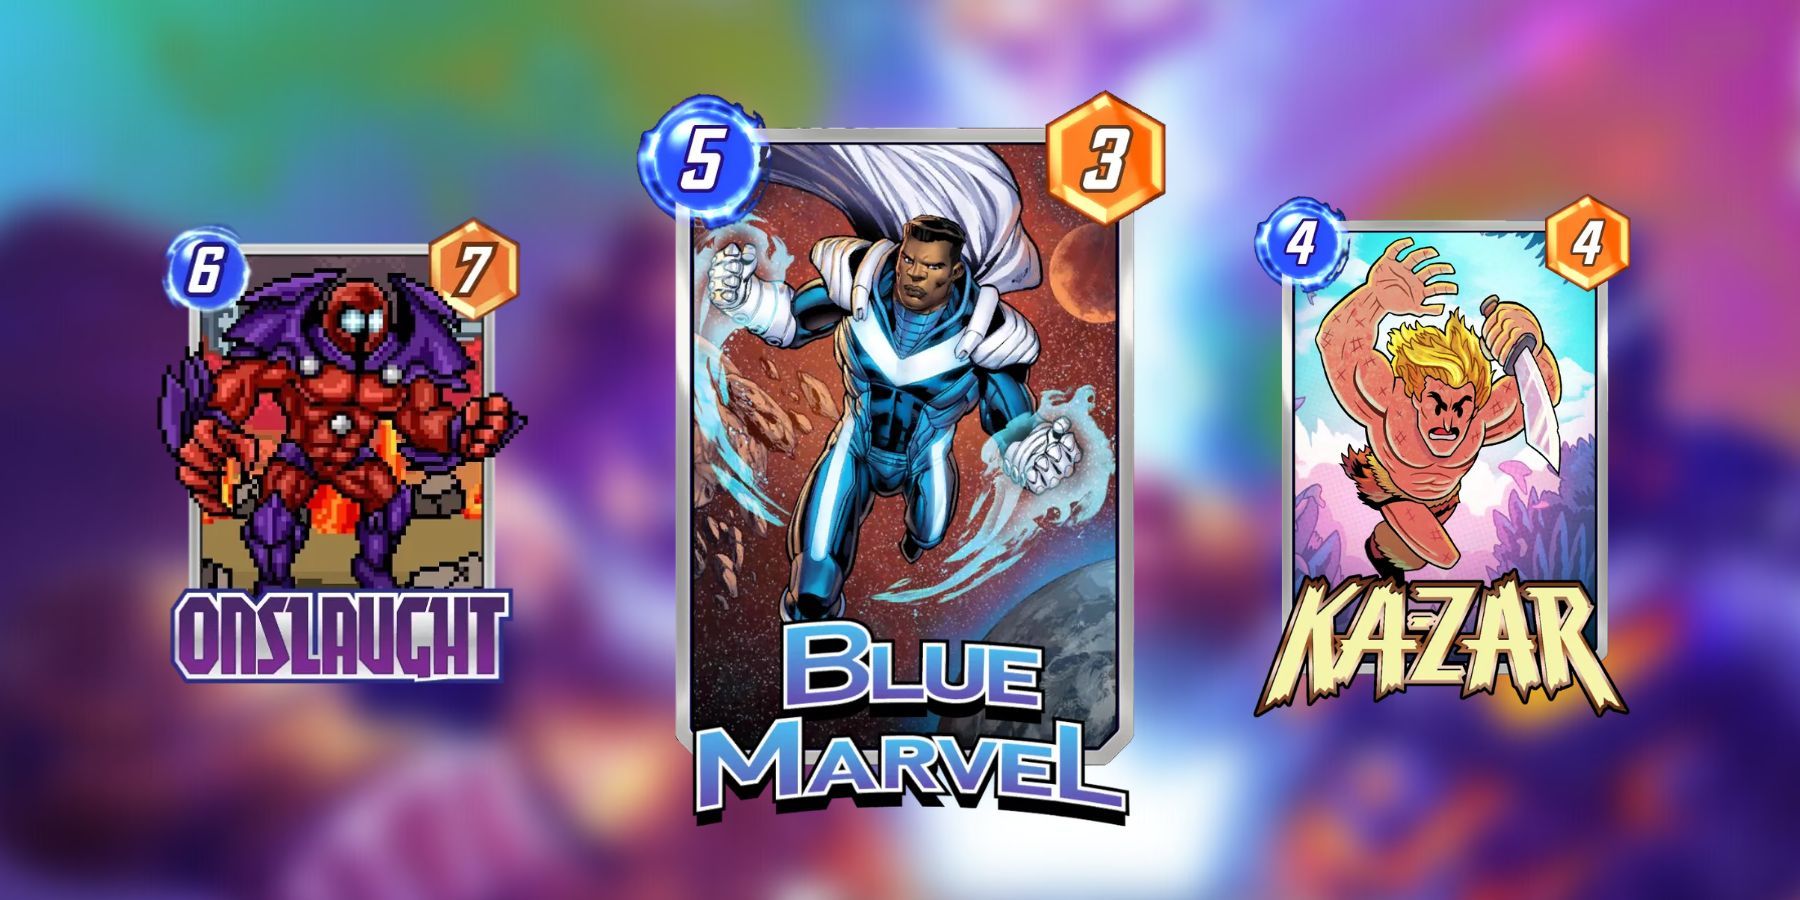 blue marvel, onslaught, kazar in marvel snap.